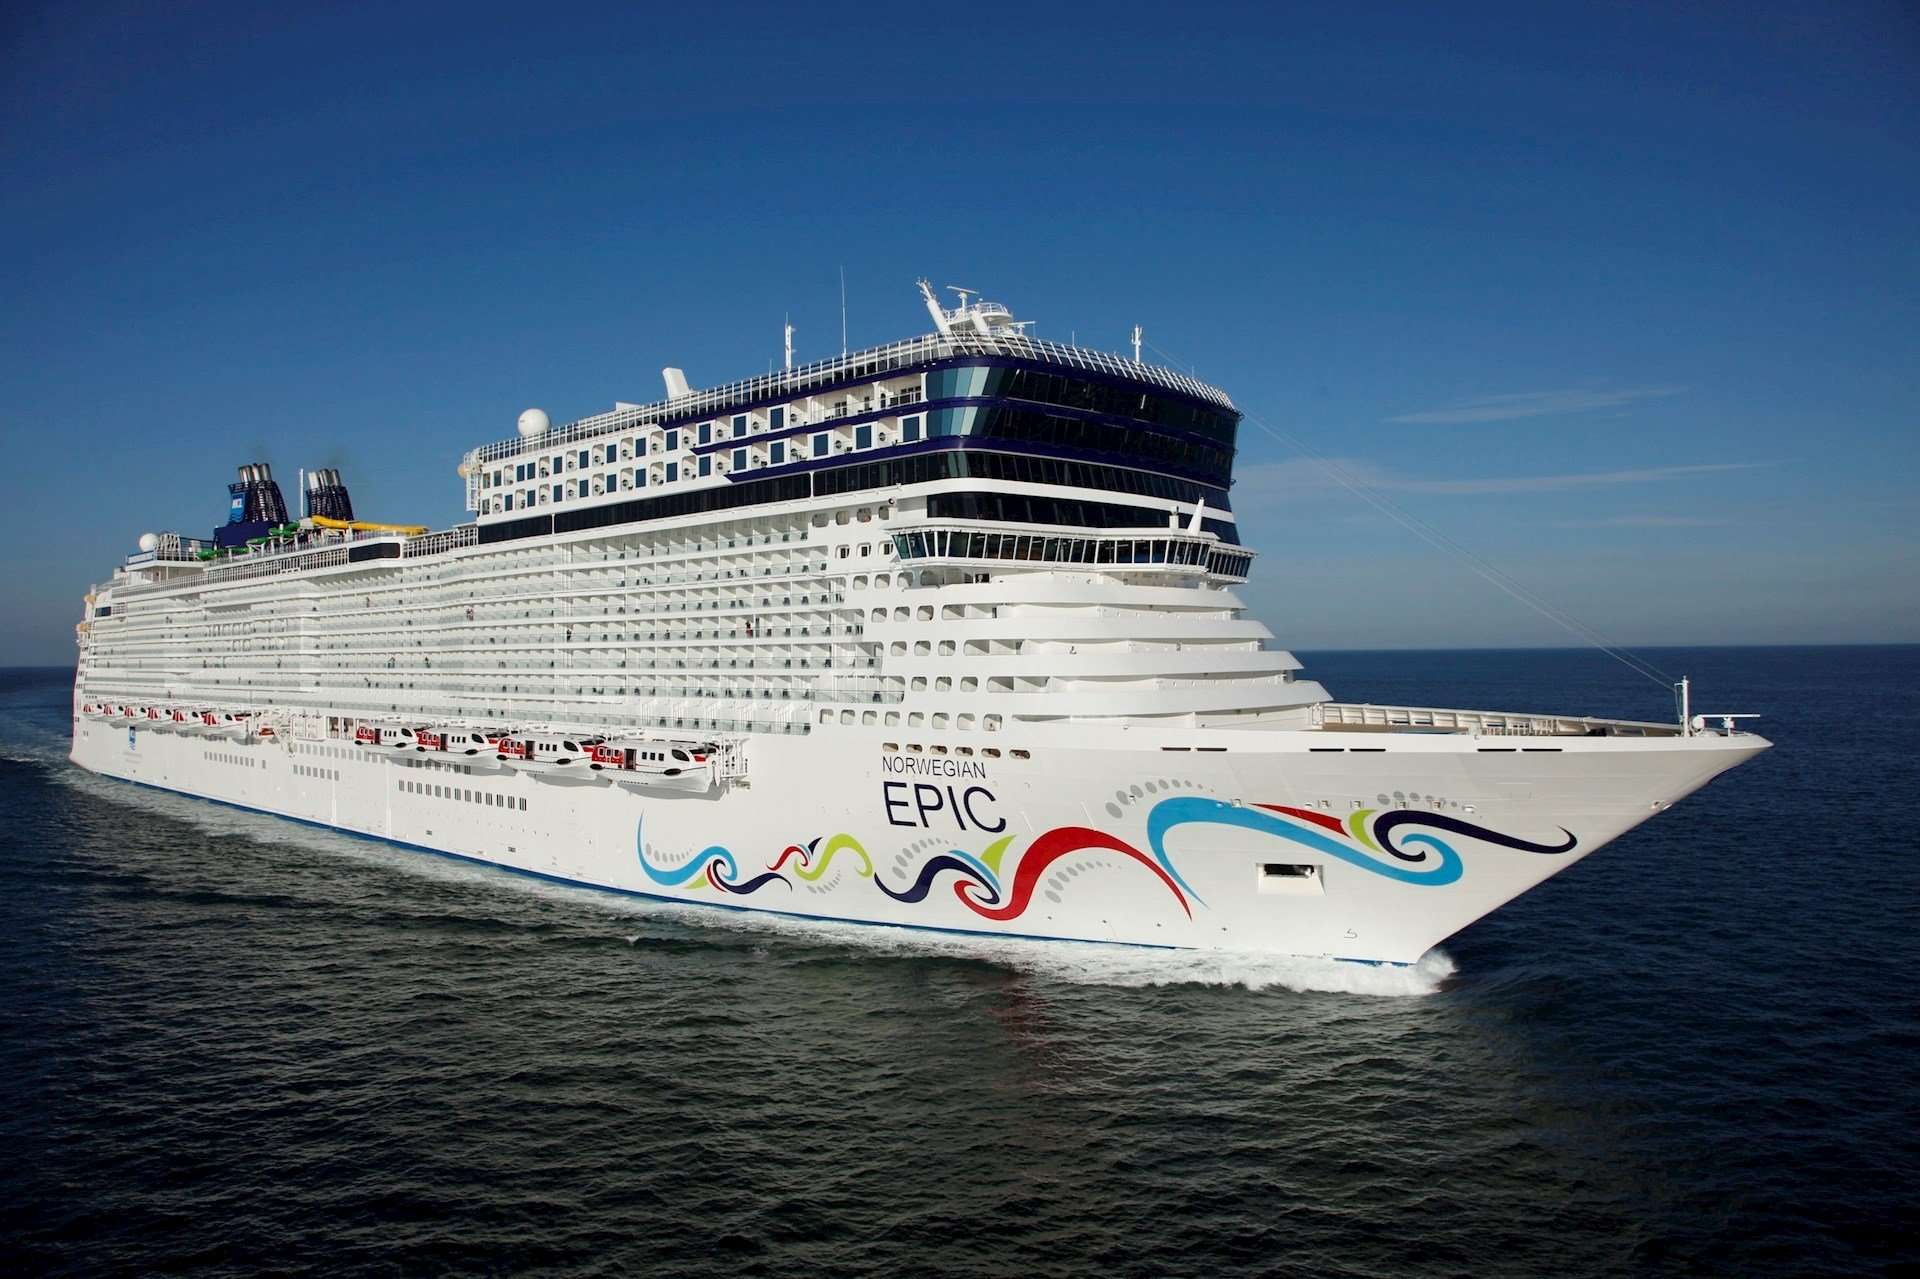 Norwegian Epic Cruise Ship 2021 / 2022